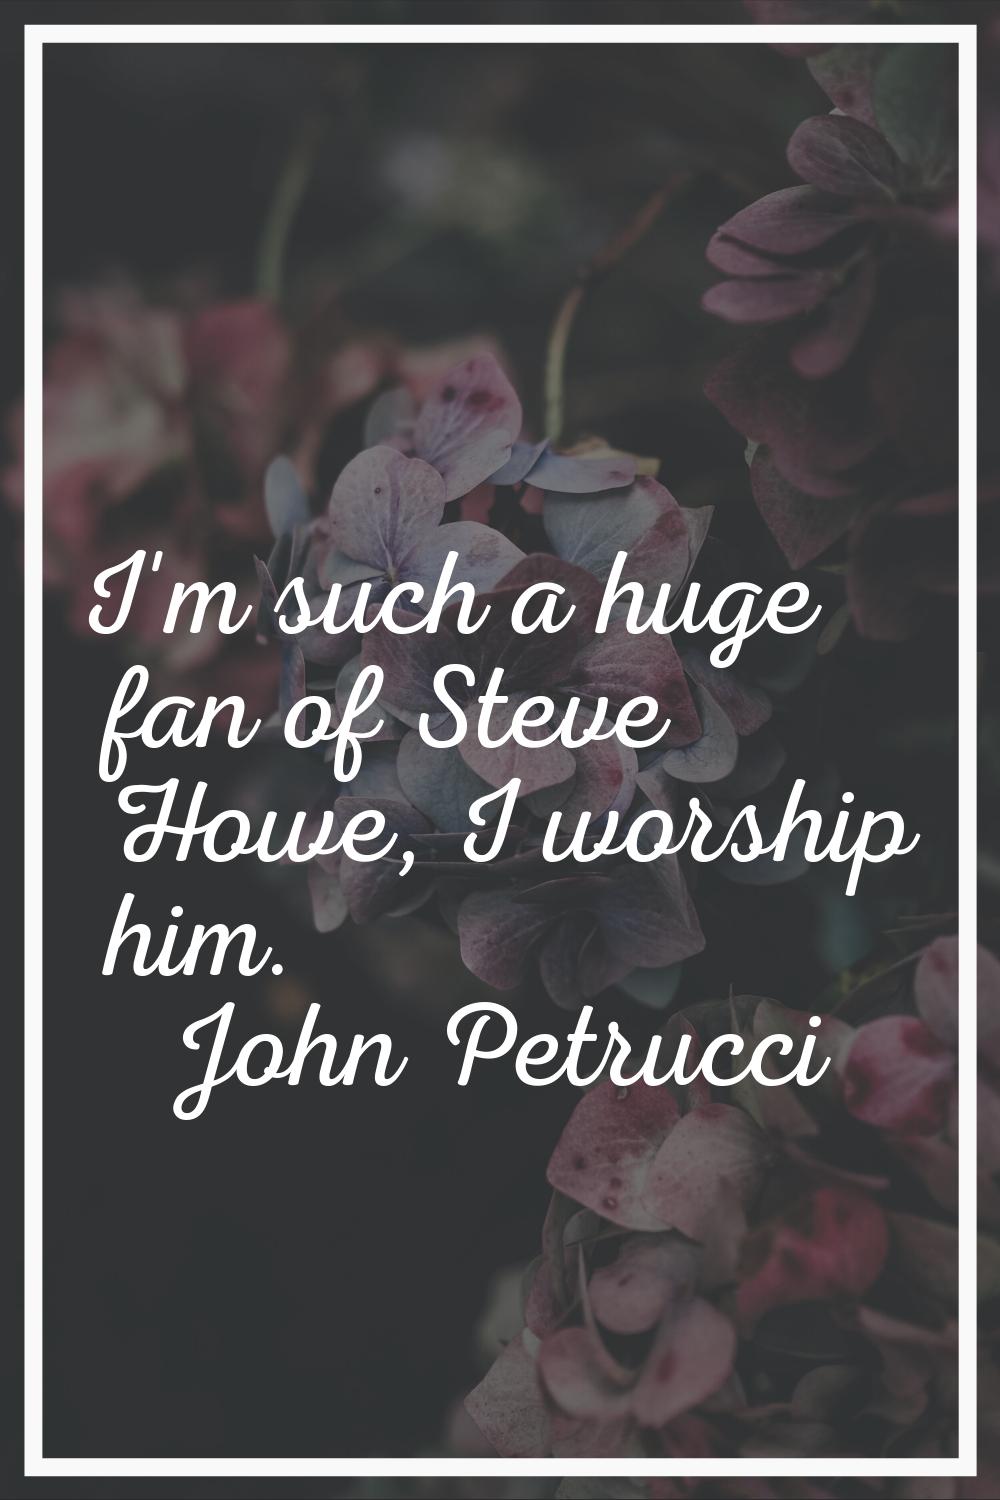 I'm such a huge fan of Steve Howe, I worship him.